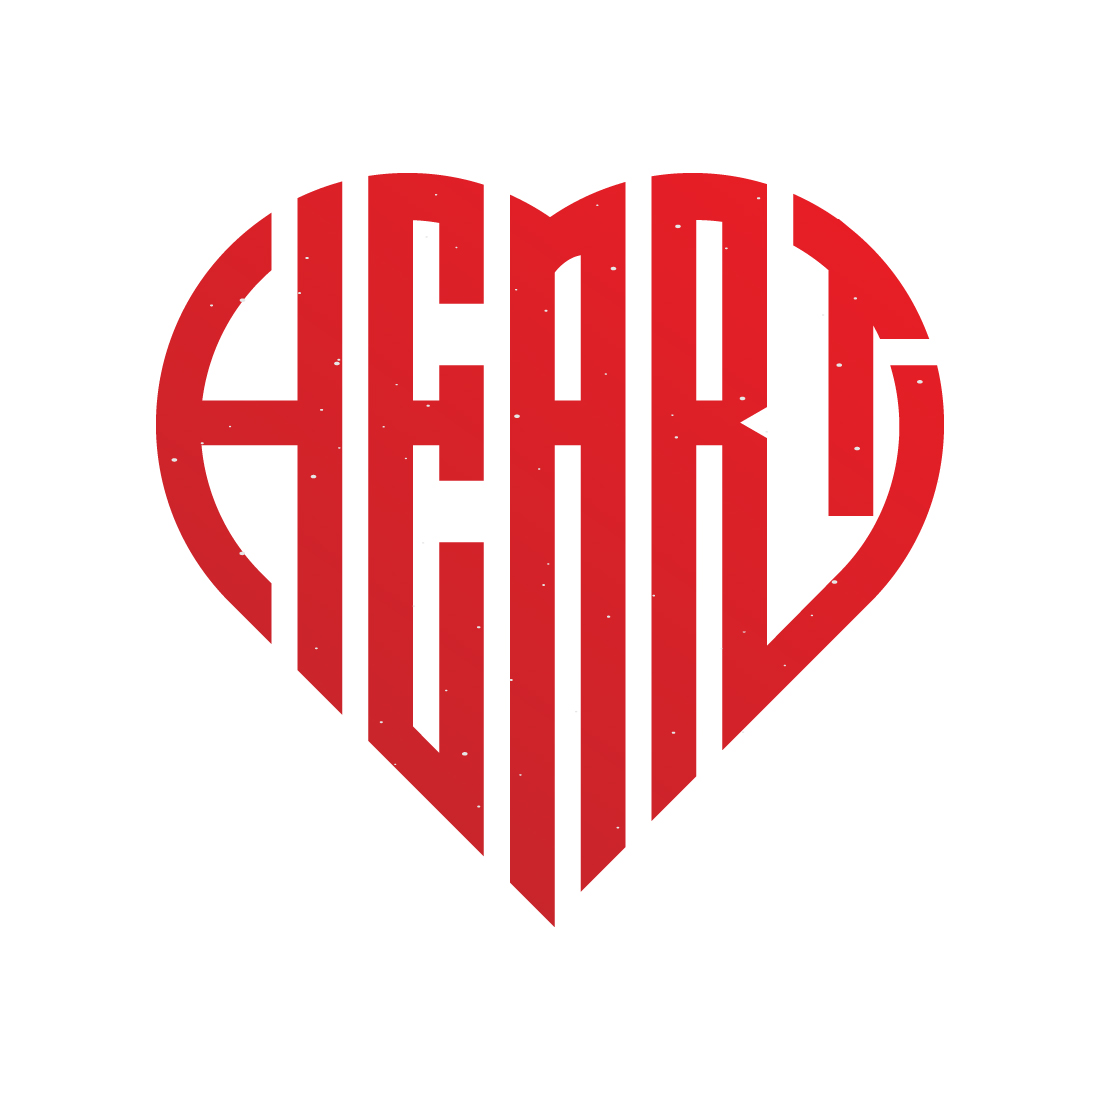 HEART logo design preview image.